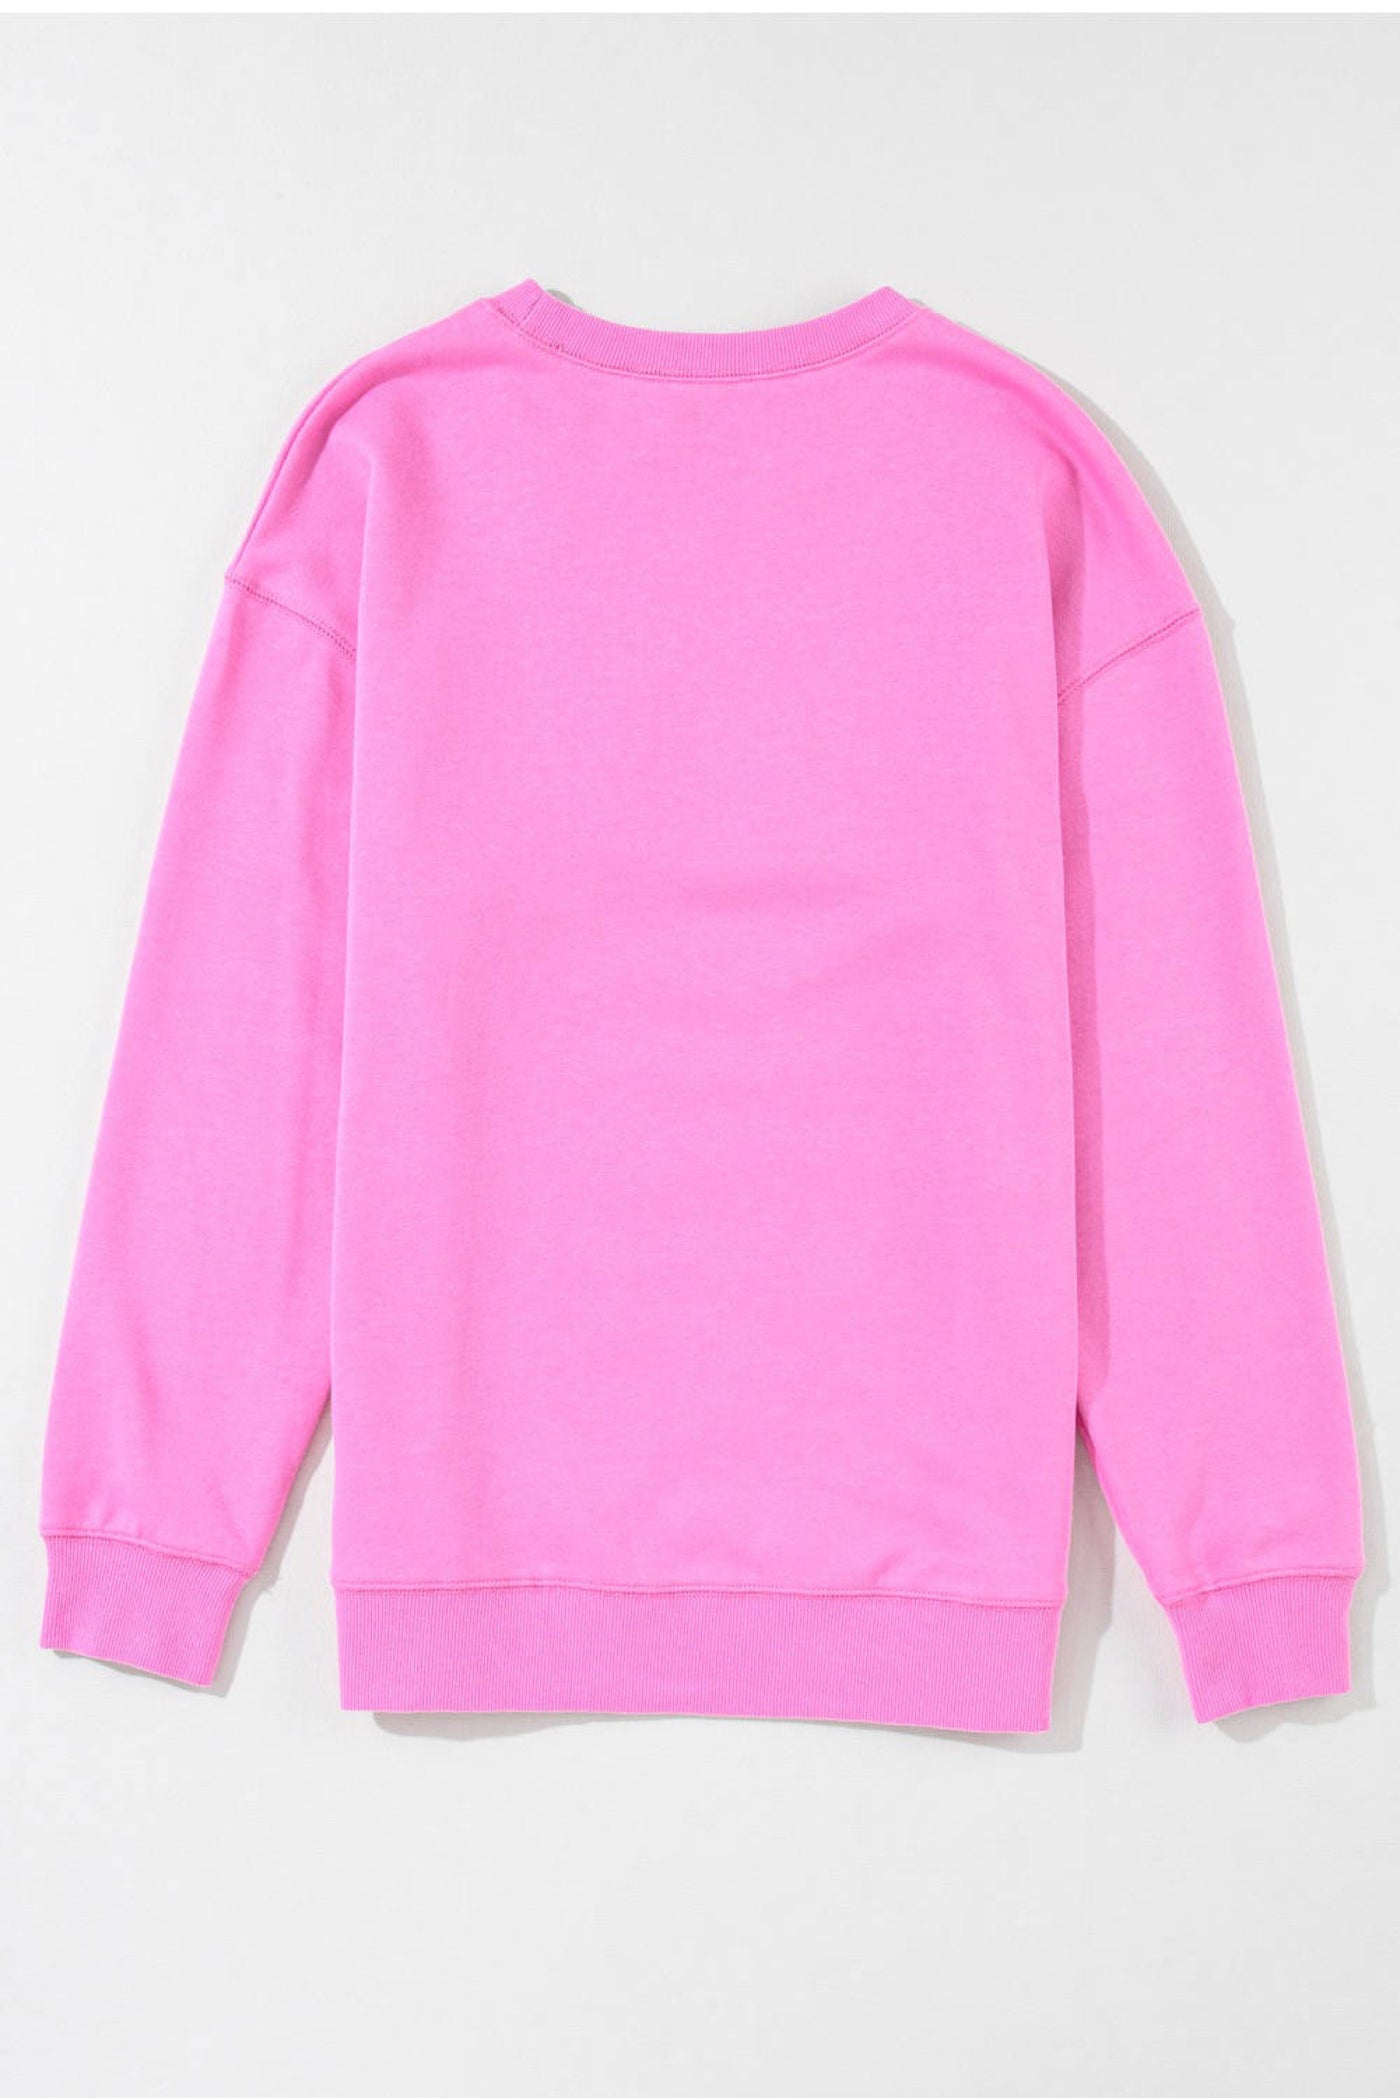 MAMA Perfect Sweatshirt preorder 3/18